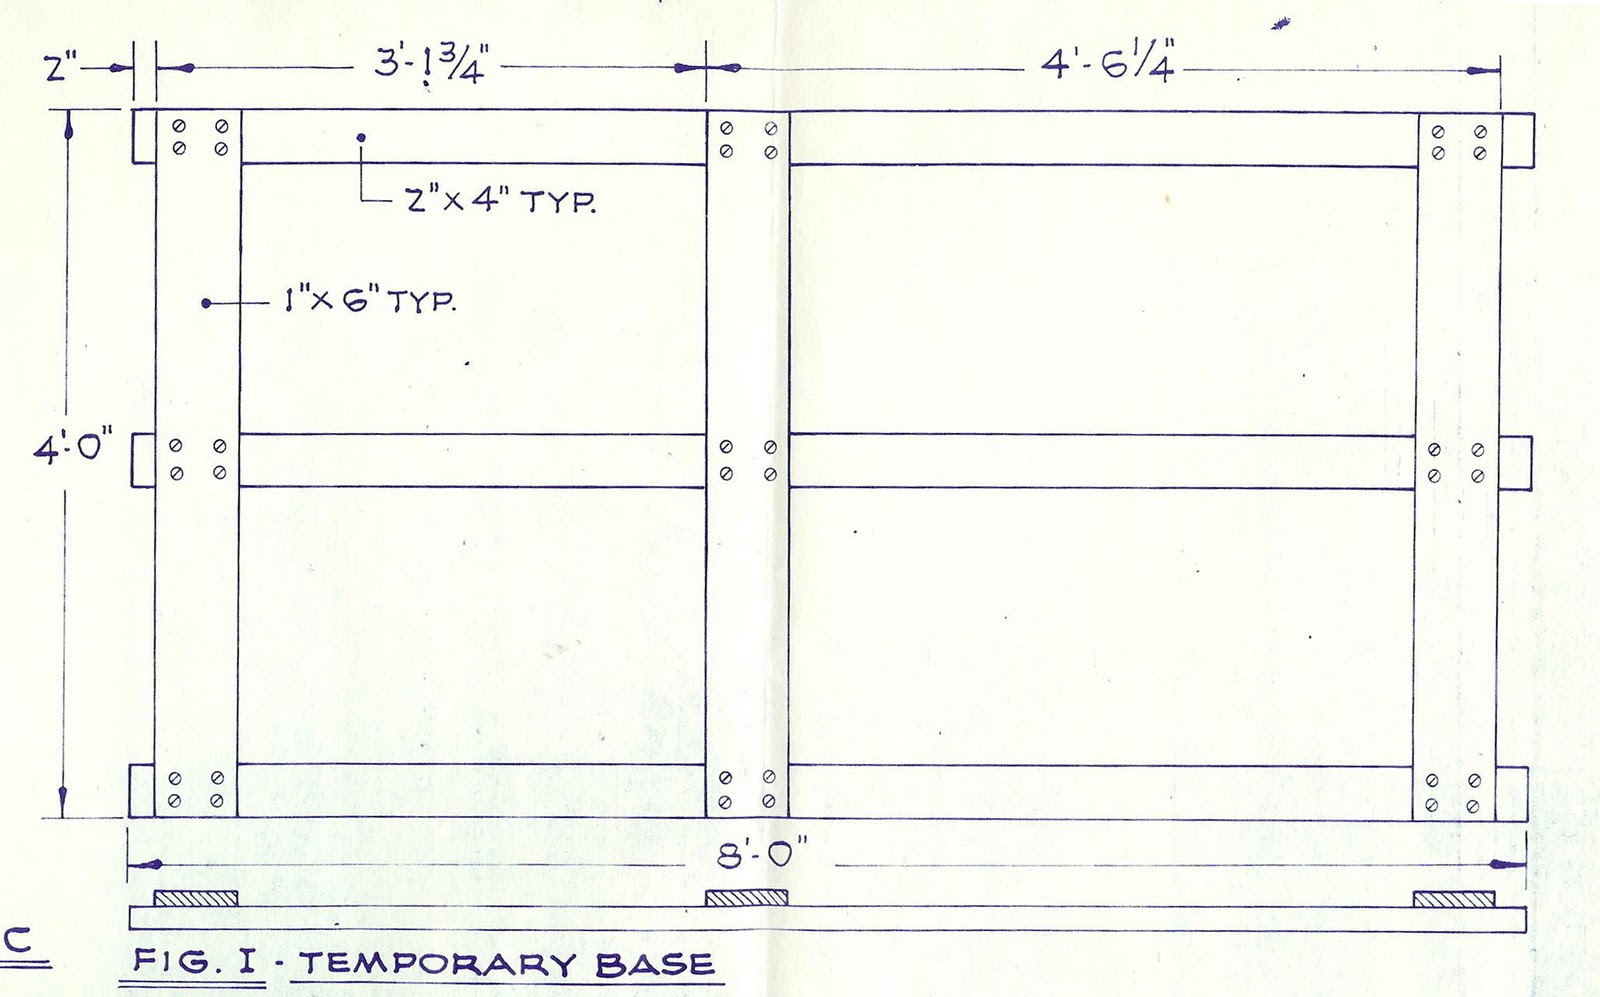 the original Optimist Pram blueprints that were issued by the Optimist 